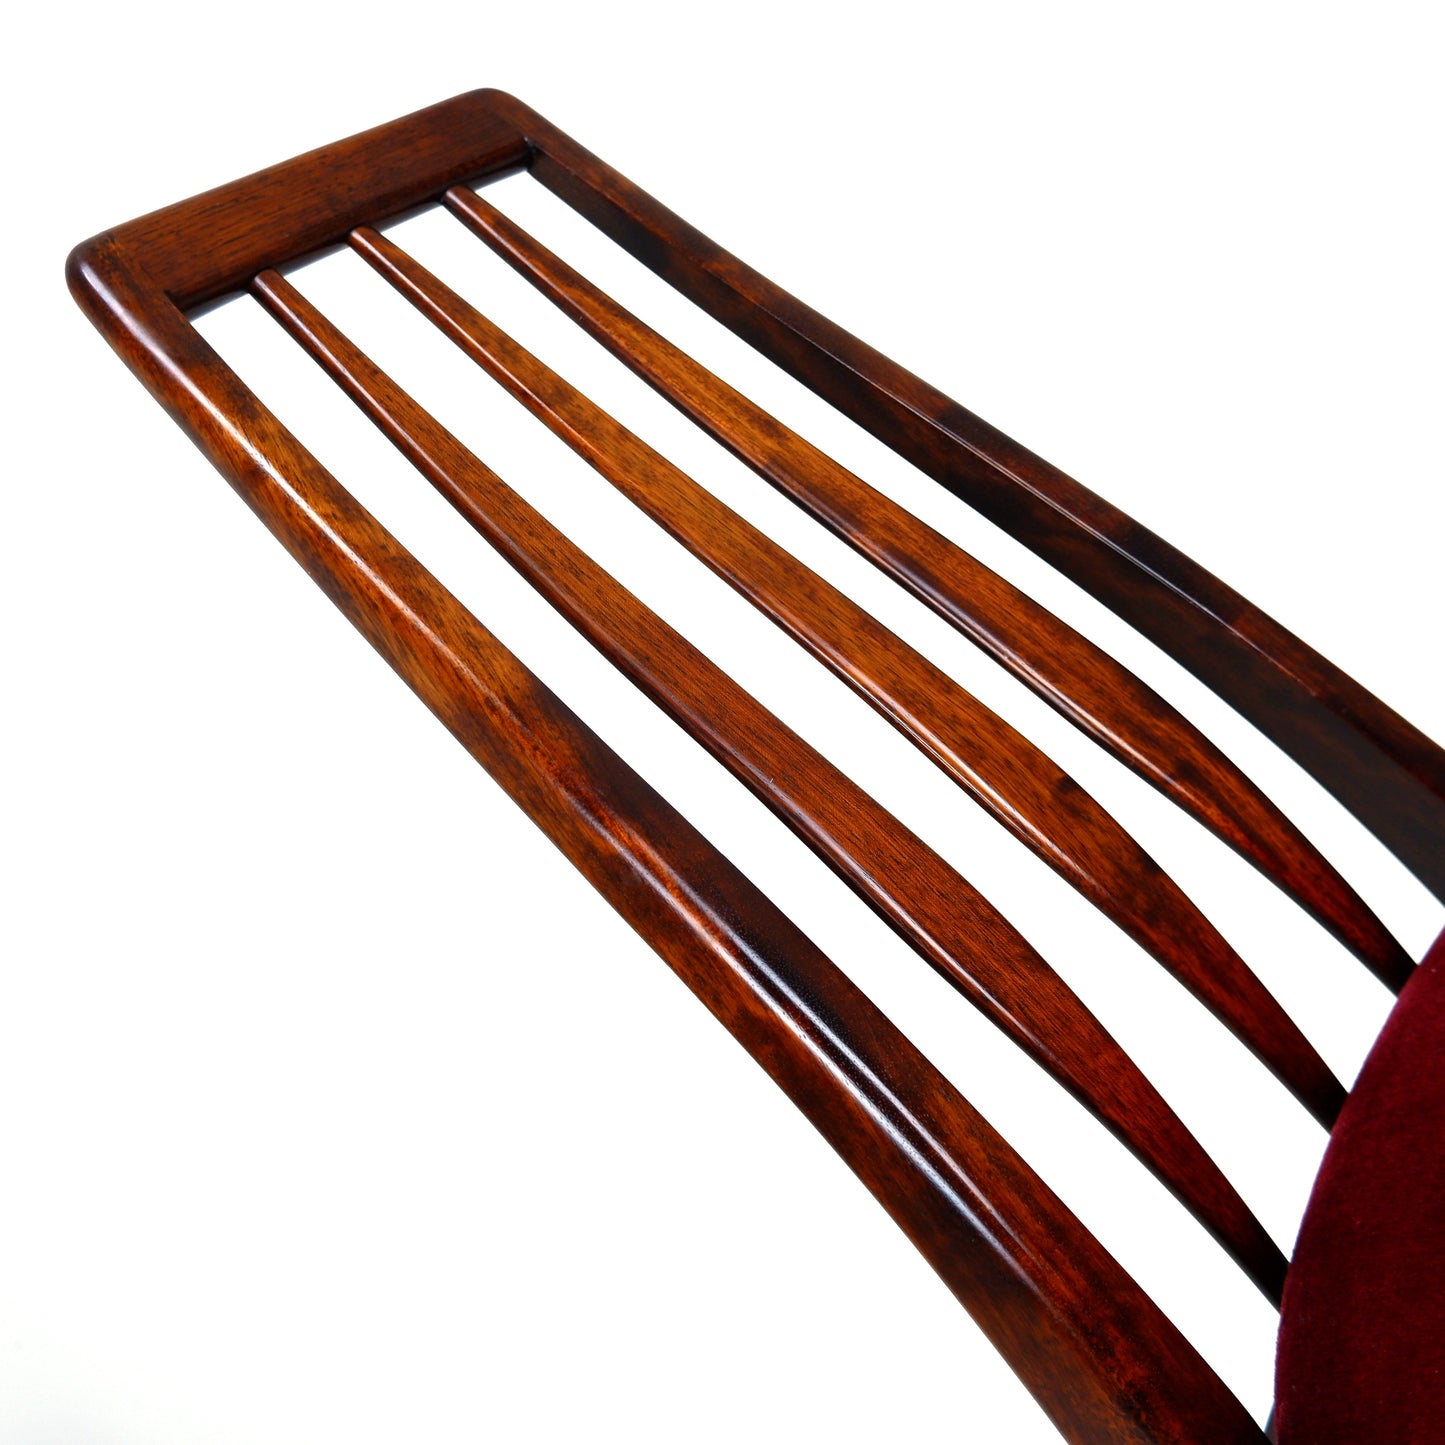 Set 6 Danish Dining Chairs by Niels Koefoed for Koefoeds Hornslet - Model "Eva"